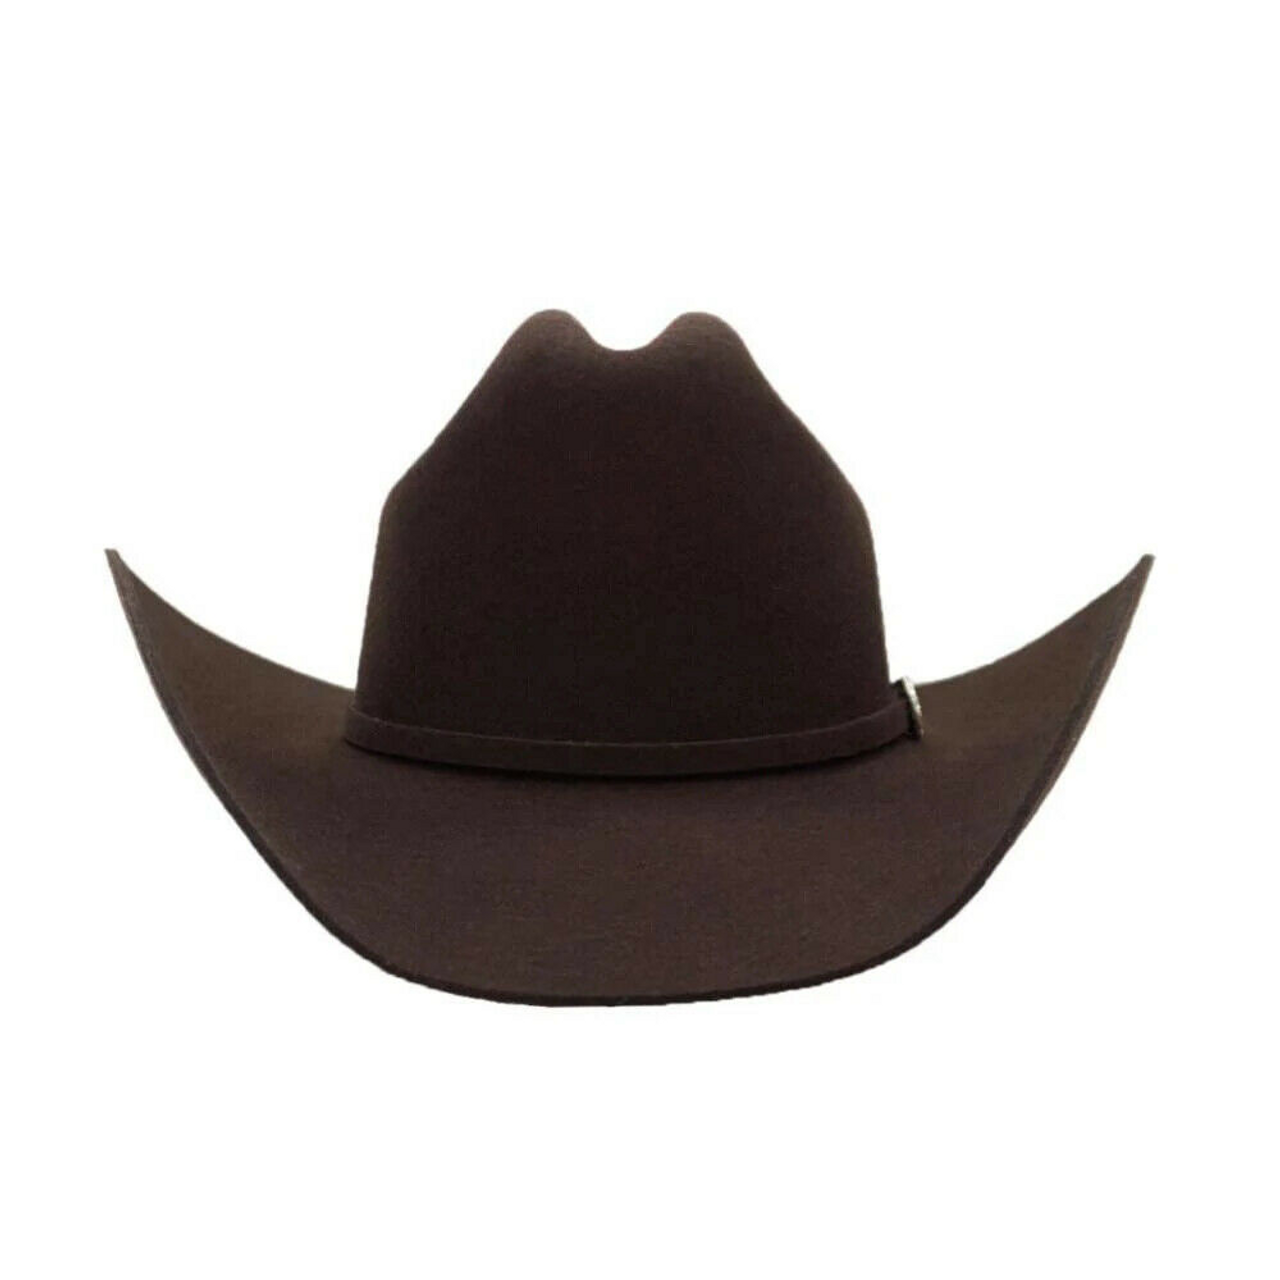 Stetson Cowboy Hats - Texanas Marca Stetson - 4X Stetson Brenham Felt Cowboy Hat Chocolate